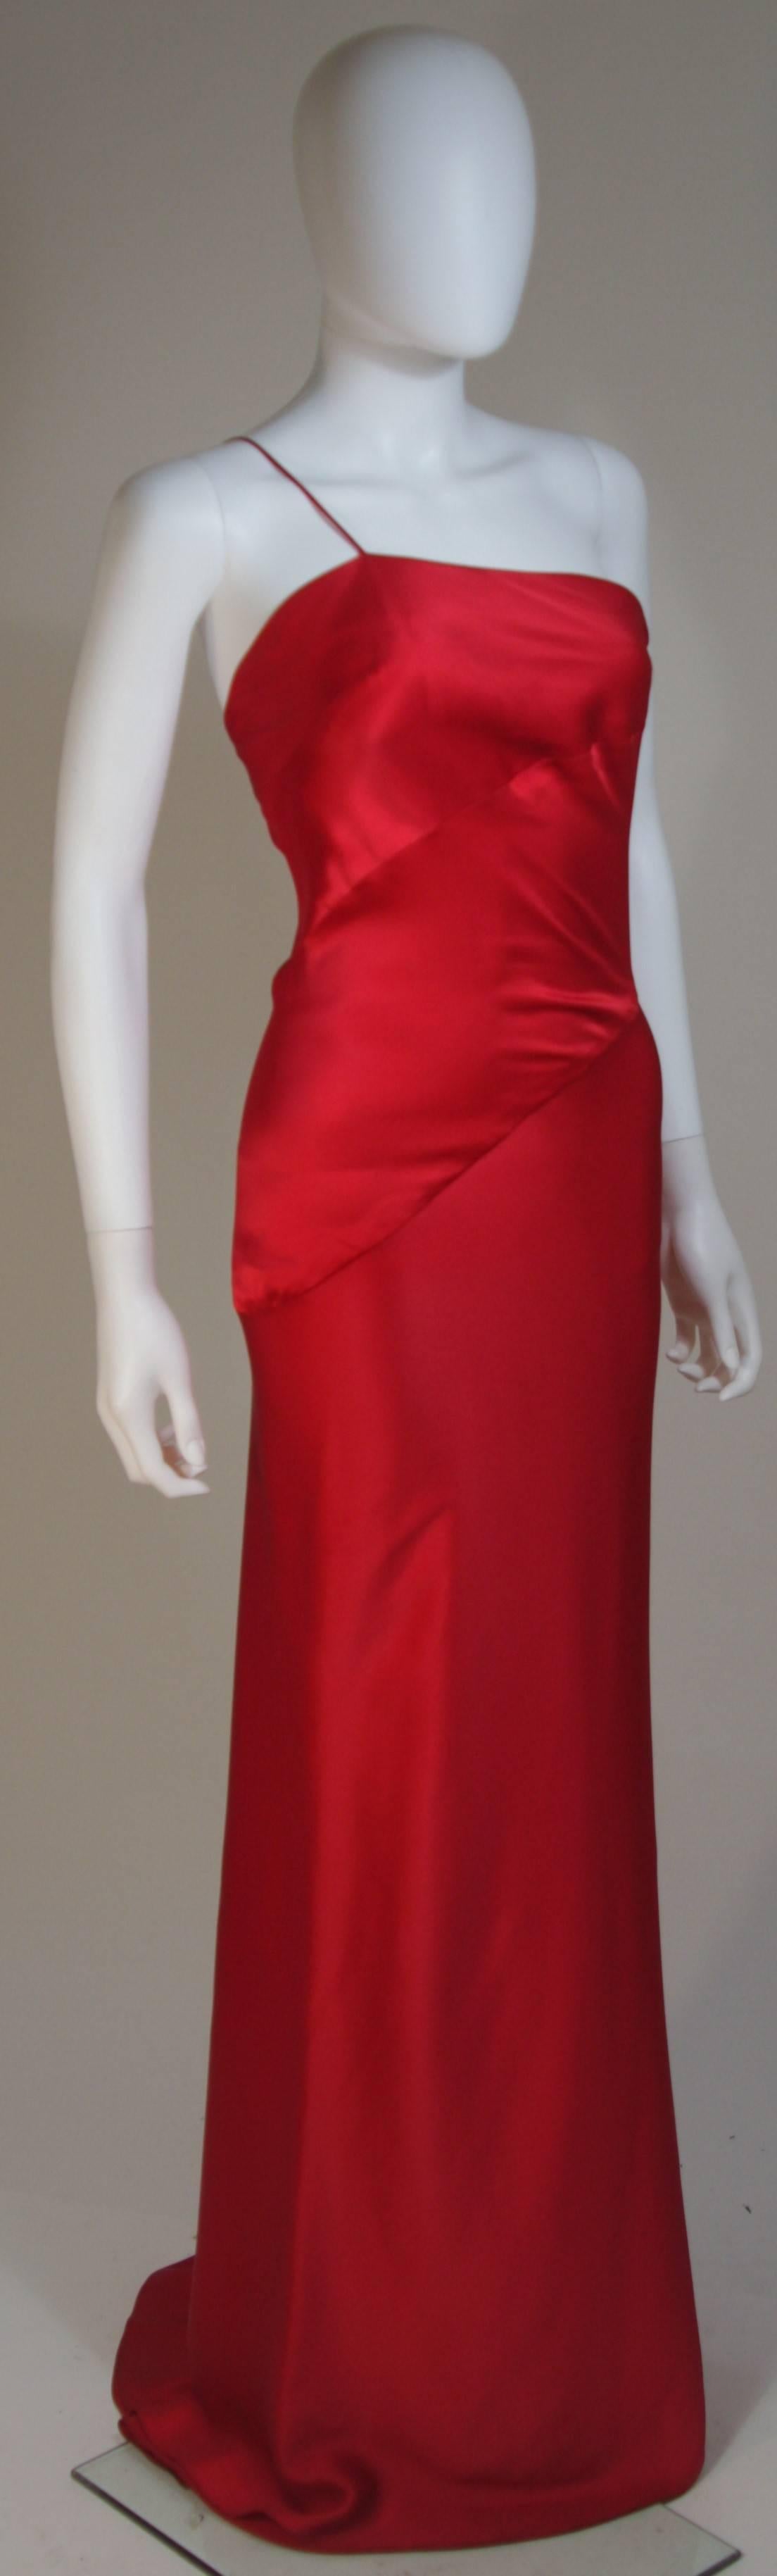 Women's CANTU & CASTILLO Red Silk Bias Cut Asymmetrical Gown Size 2-4 For Sale